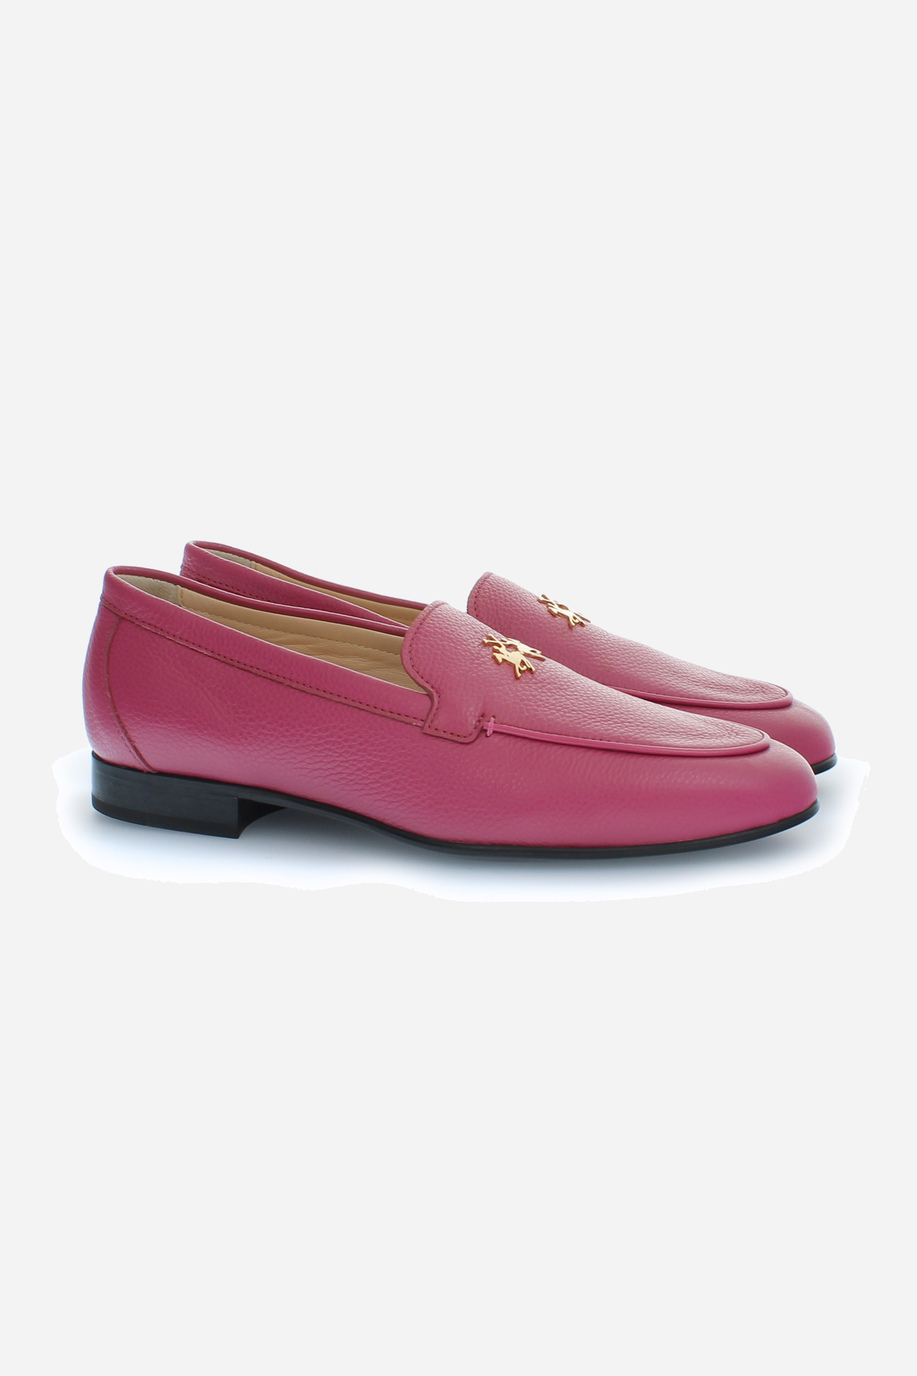 Damen-Mokassin aus Leder - Schuhe | La Martina - Official Online Shop